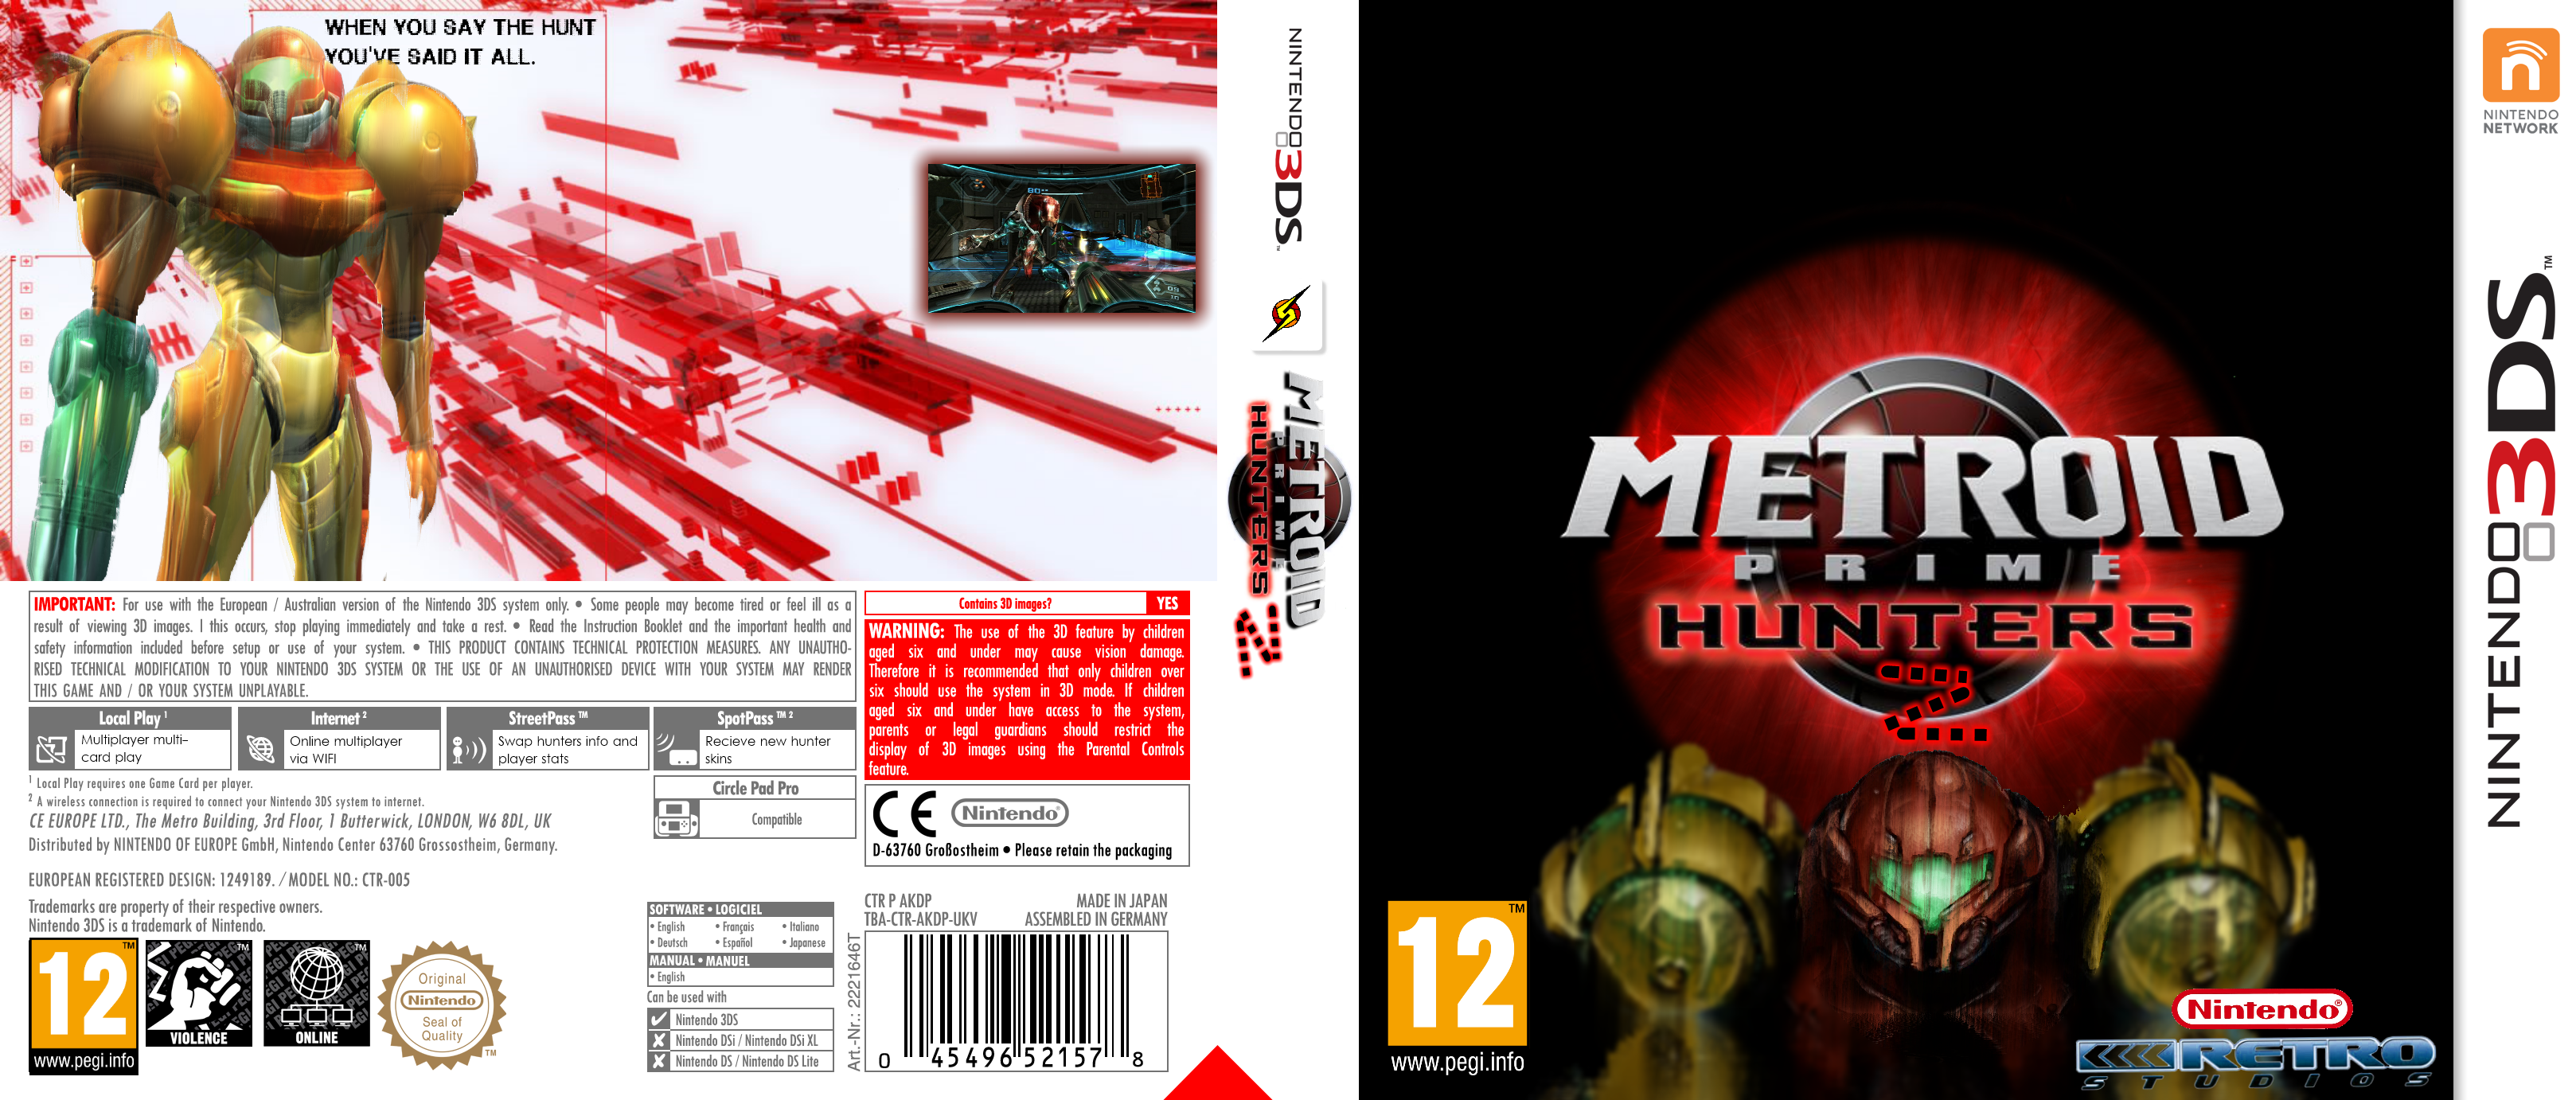 Metroid Prime Hunters 2 box cover